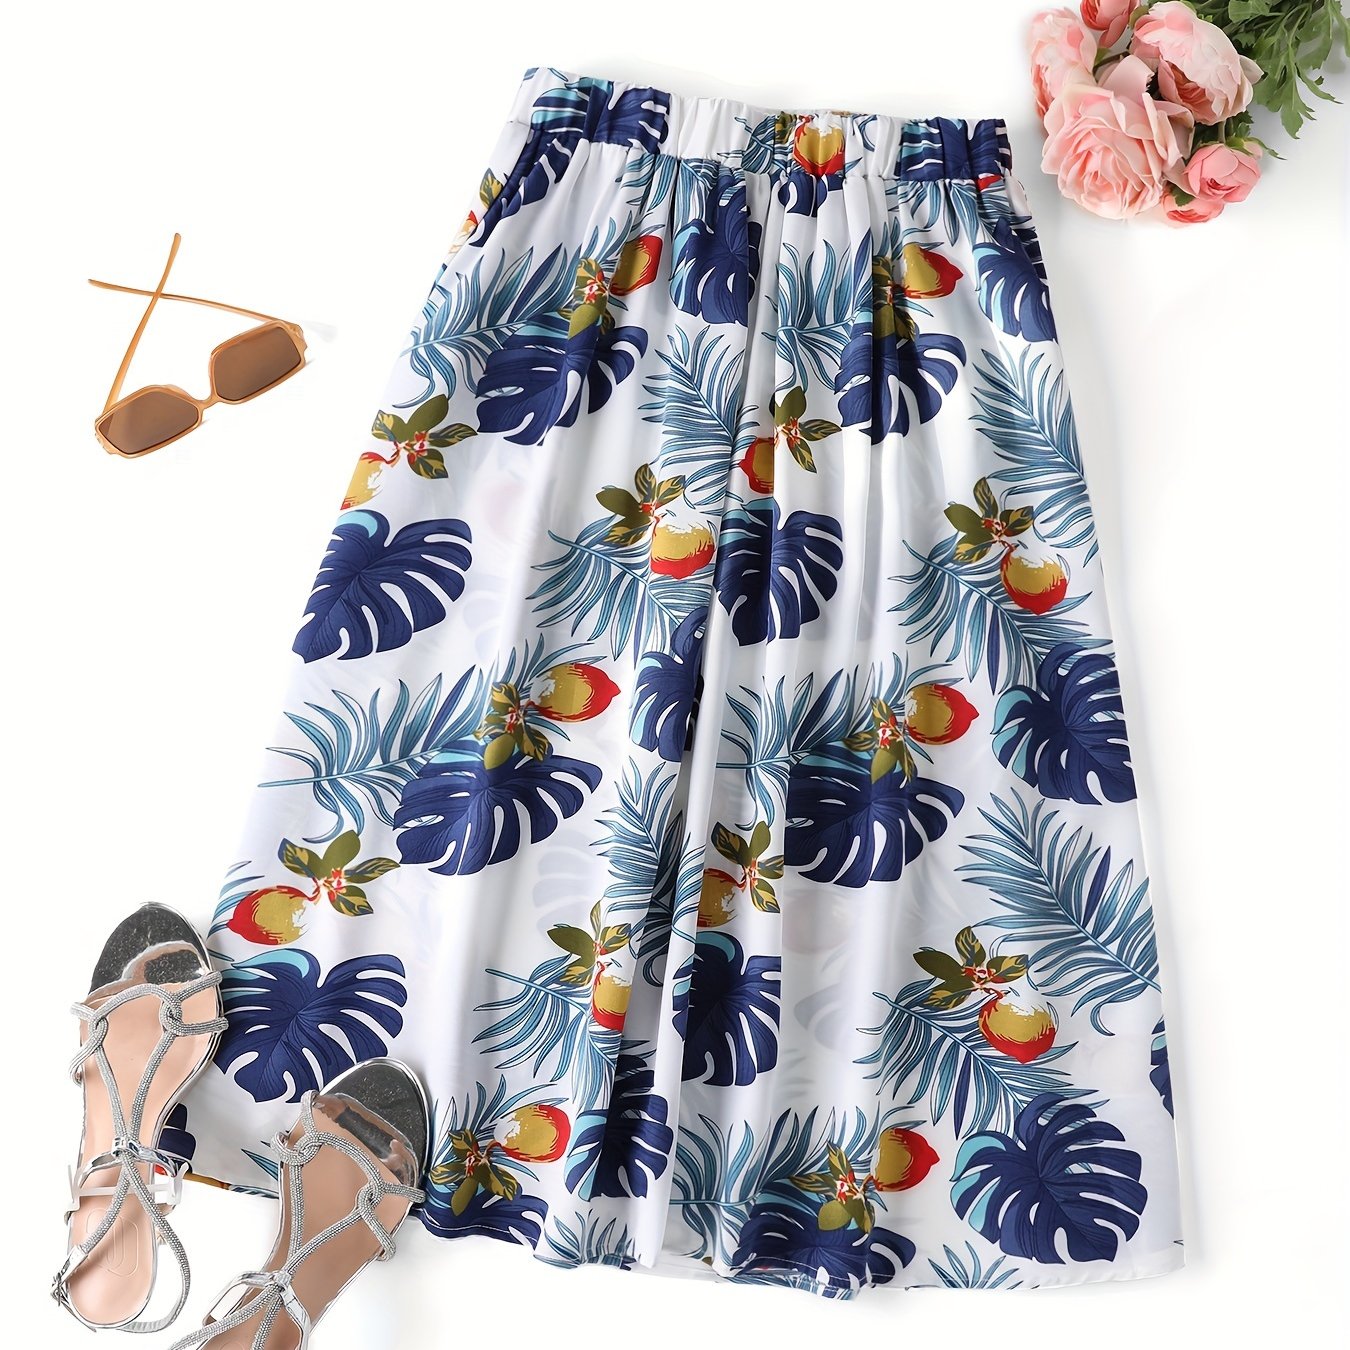 floral print high waist skirt elegant elastic waist midi skirt womens clothing